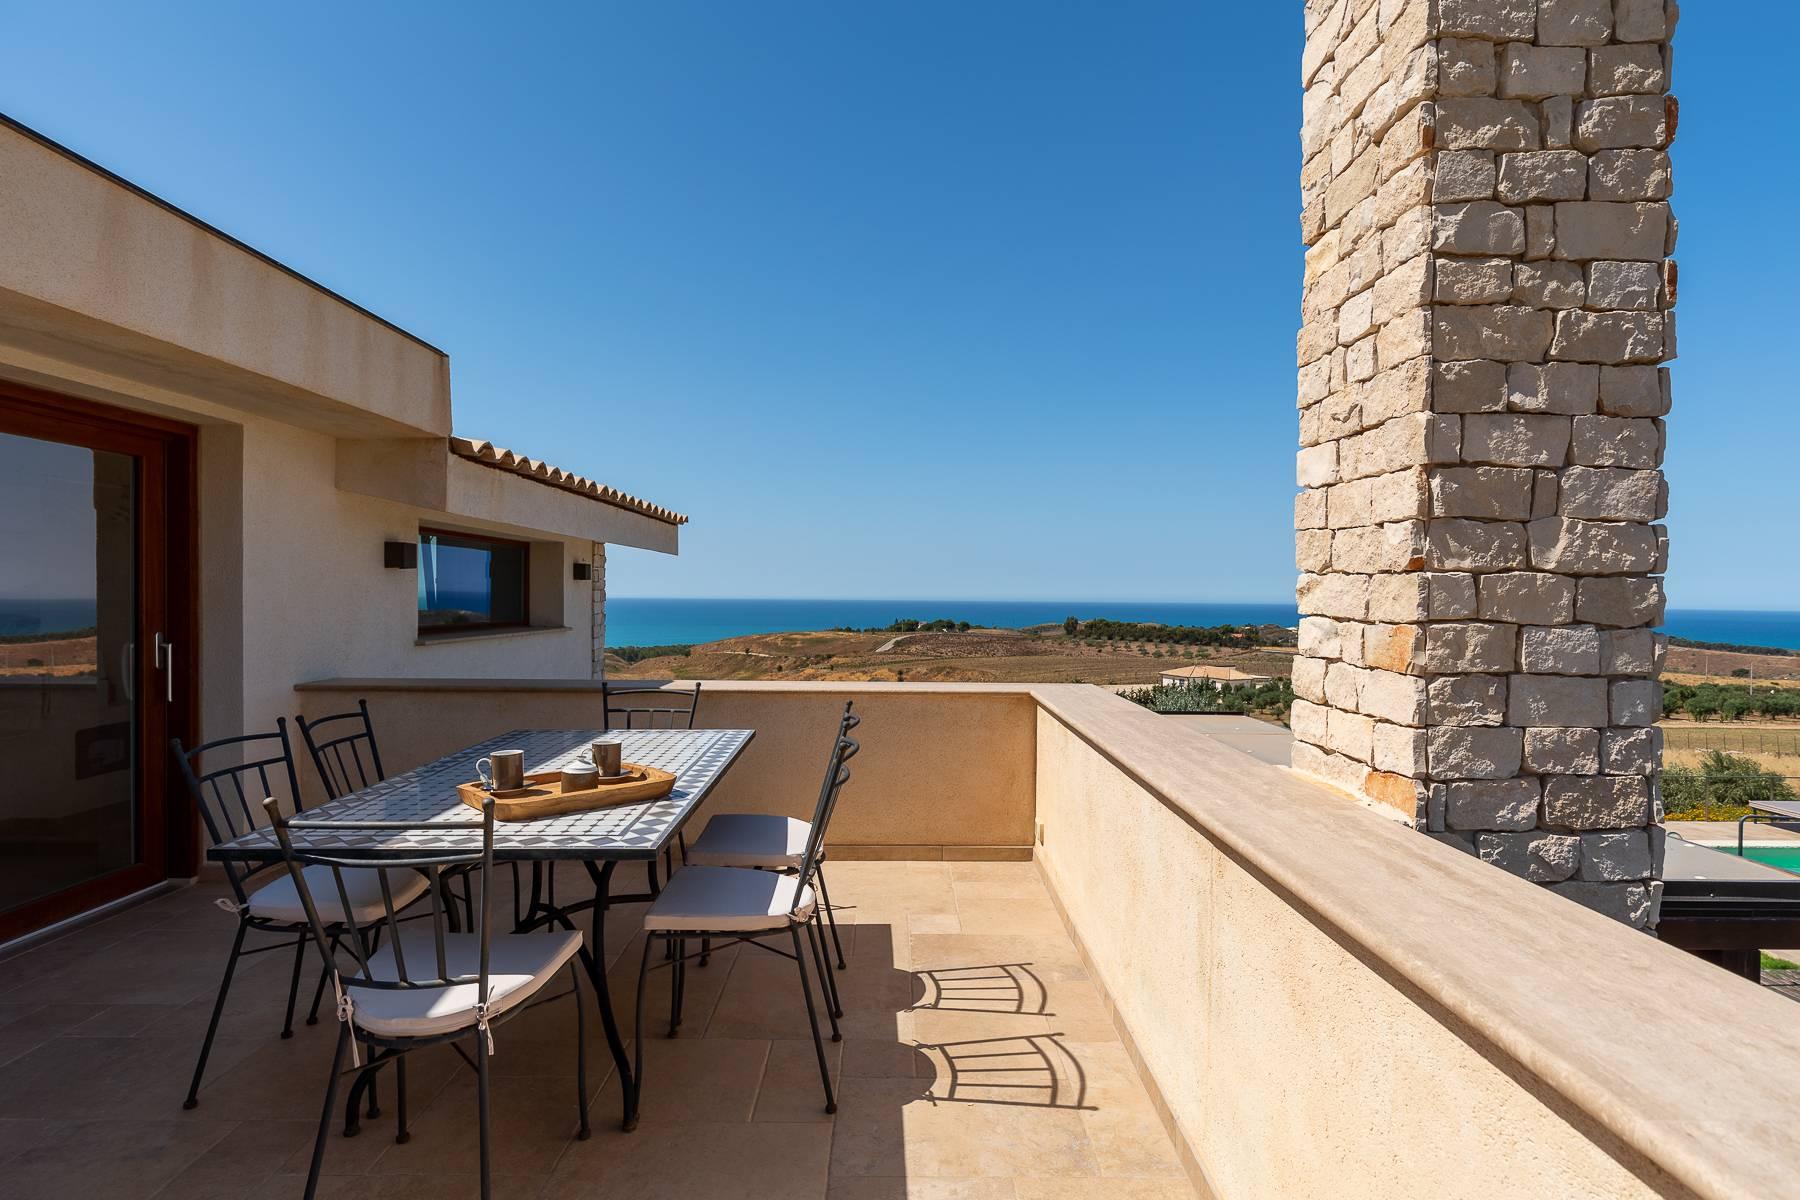 Exclusive villa with stunning views on the Mediterranean sea - 47